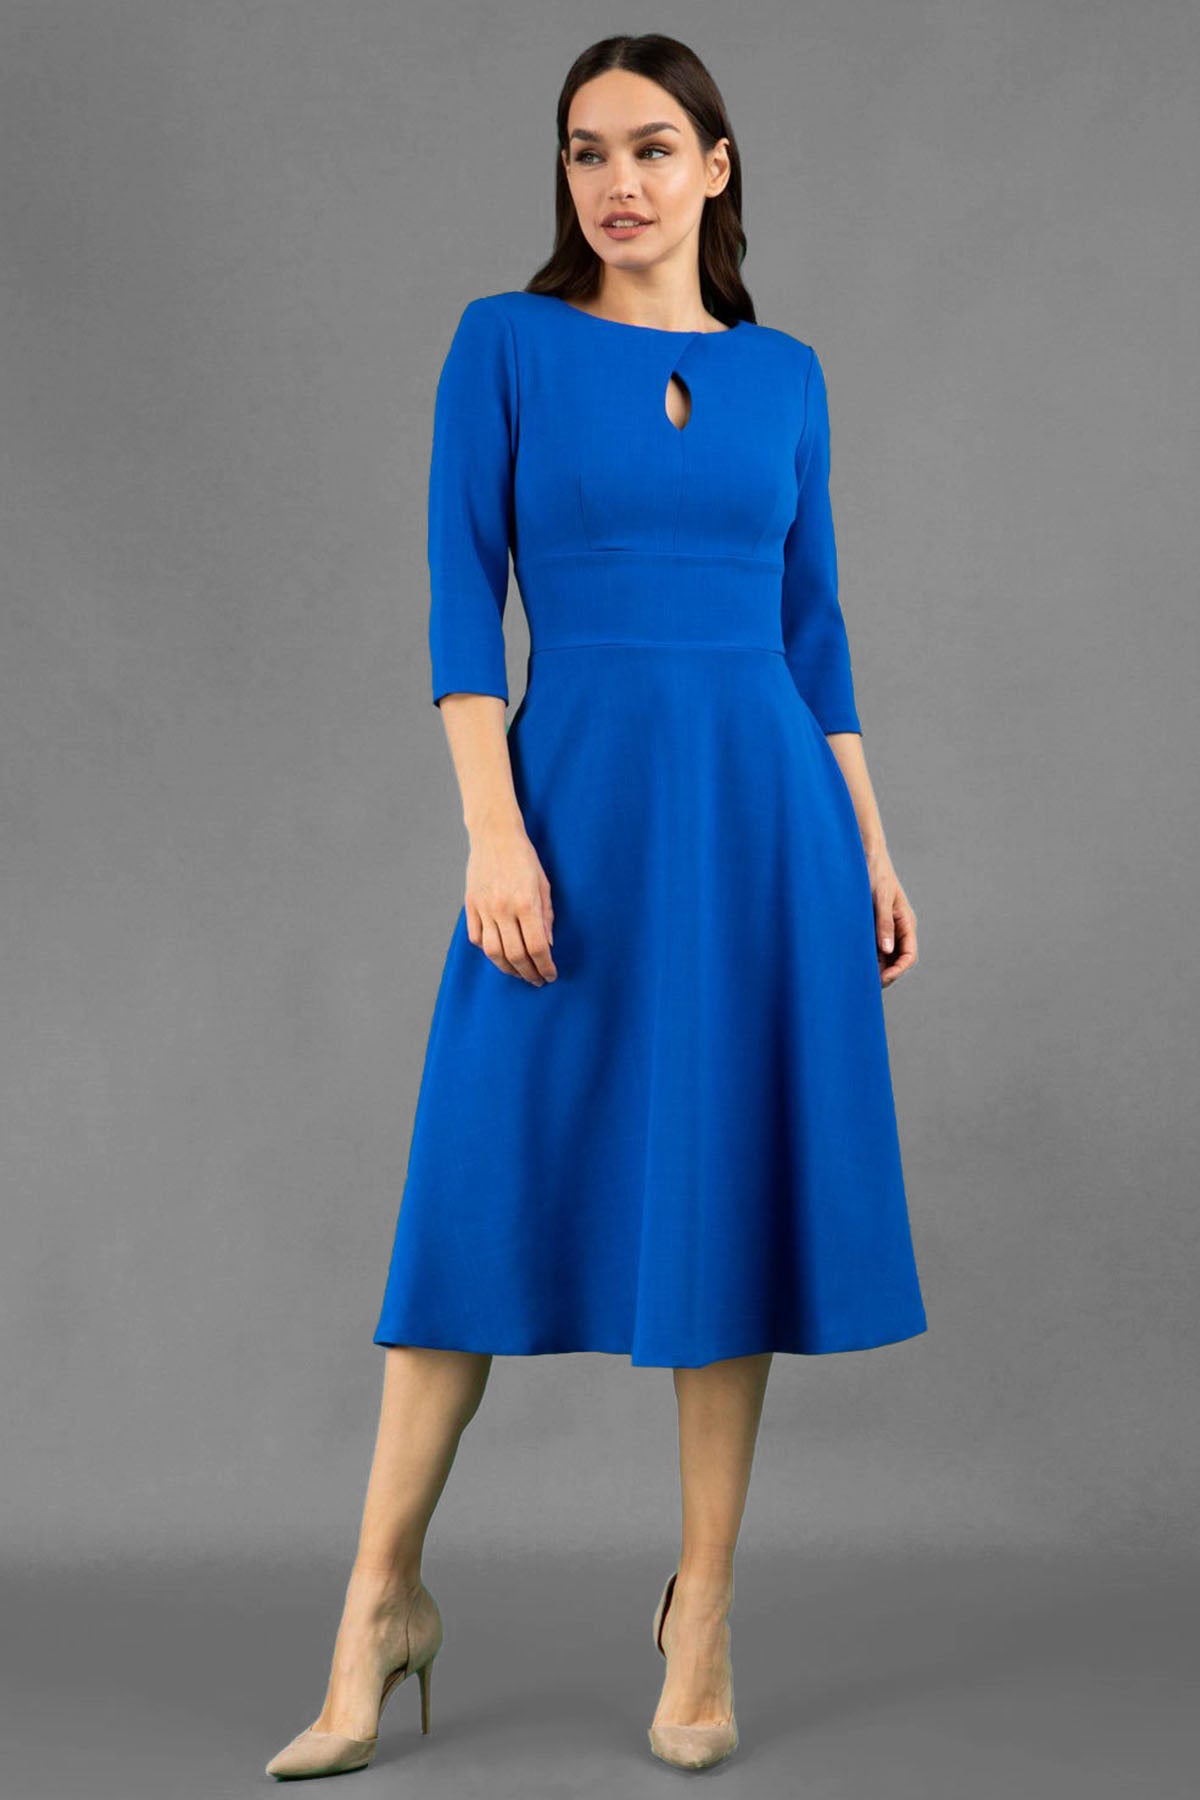 Women' Business Casares 3/4 Sleeve Swing Dress - Cobalt Blue NORA GARDNER | OFFICIAL STORE for work and office